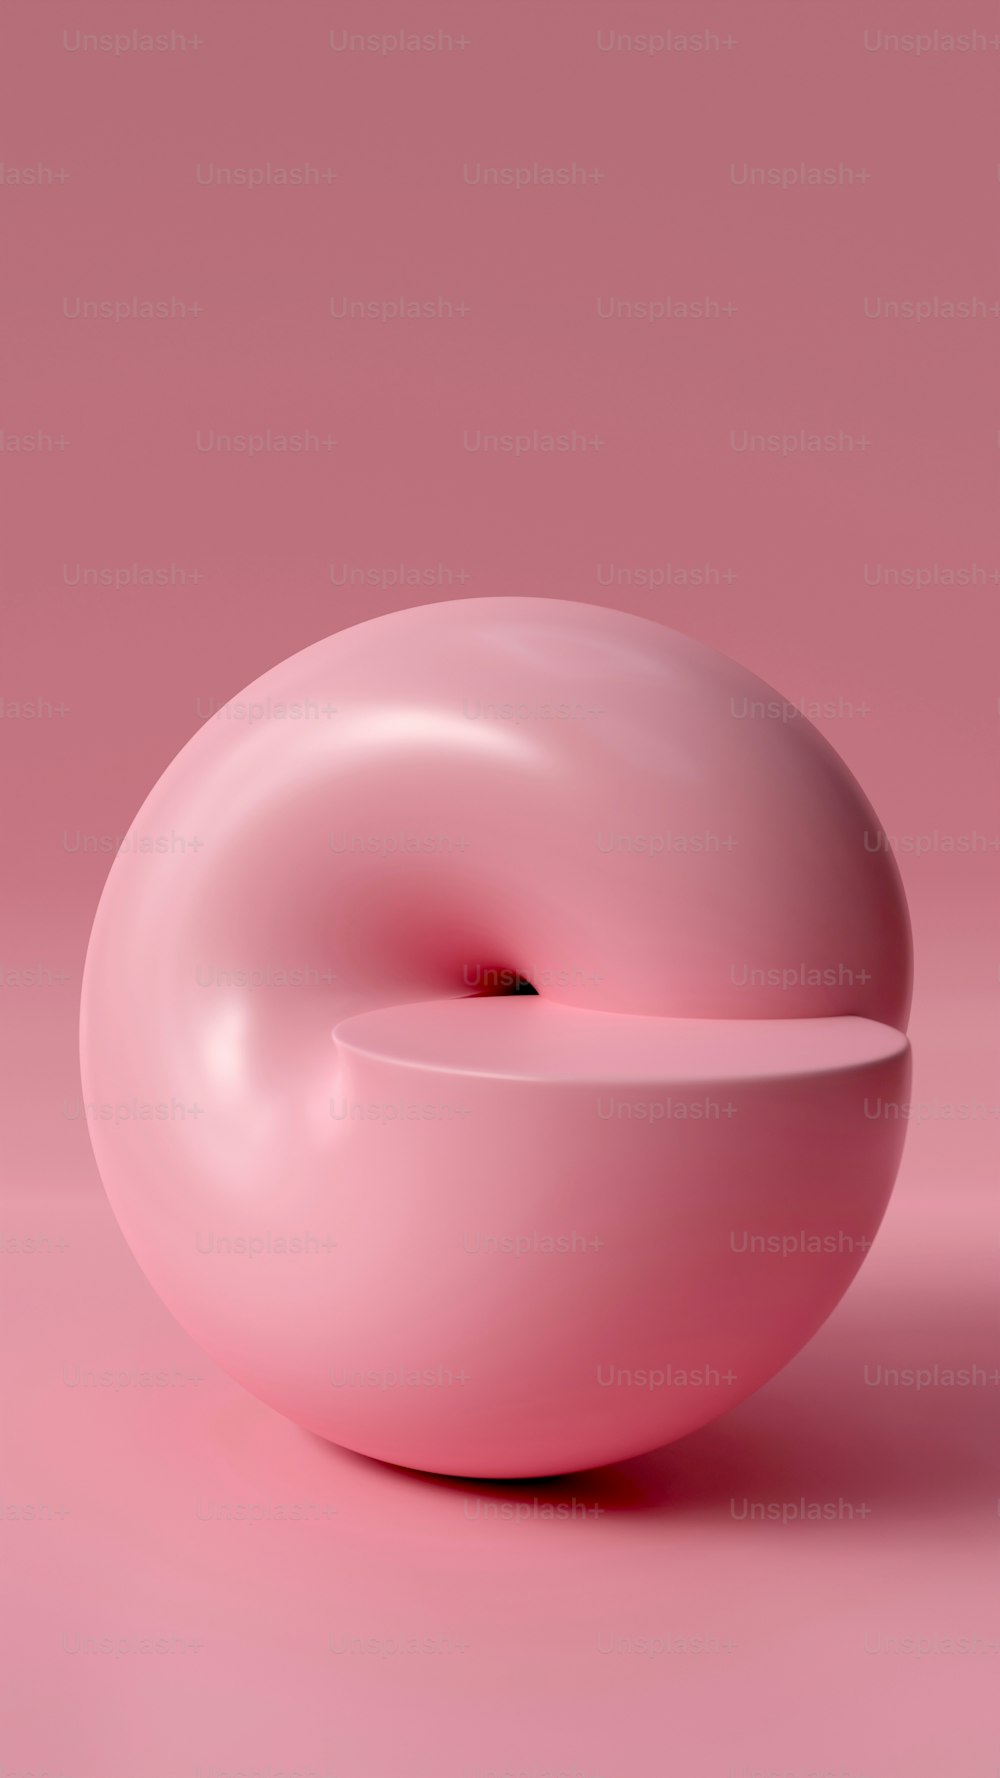 una ciambella rosa seduta sopra una superficie rosa